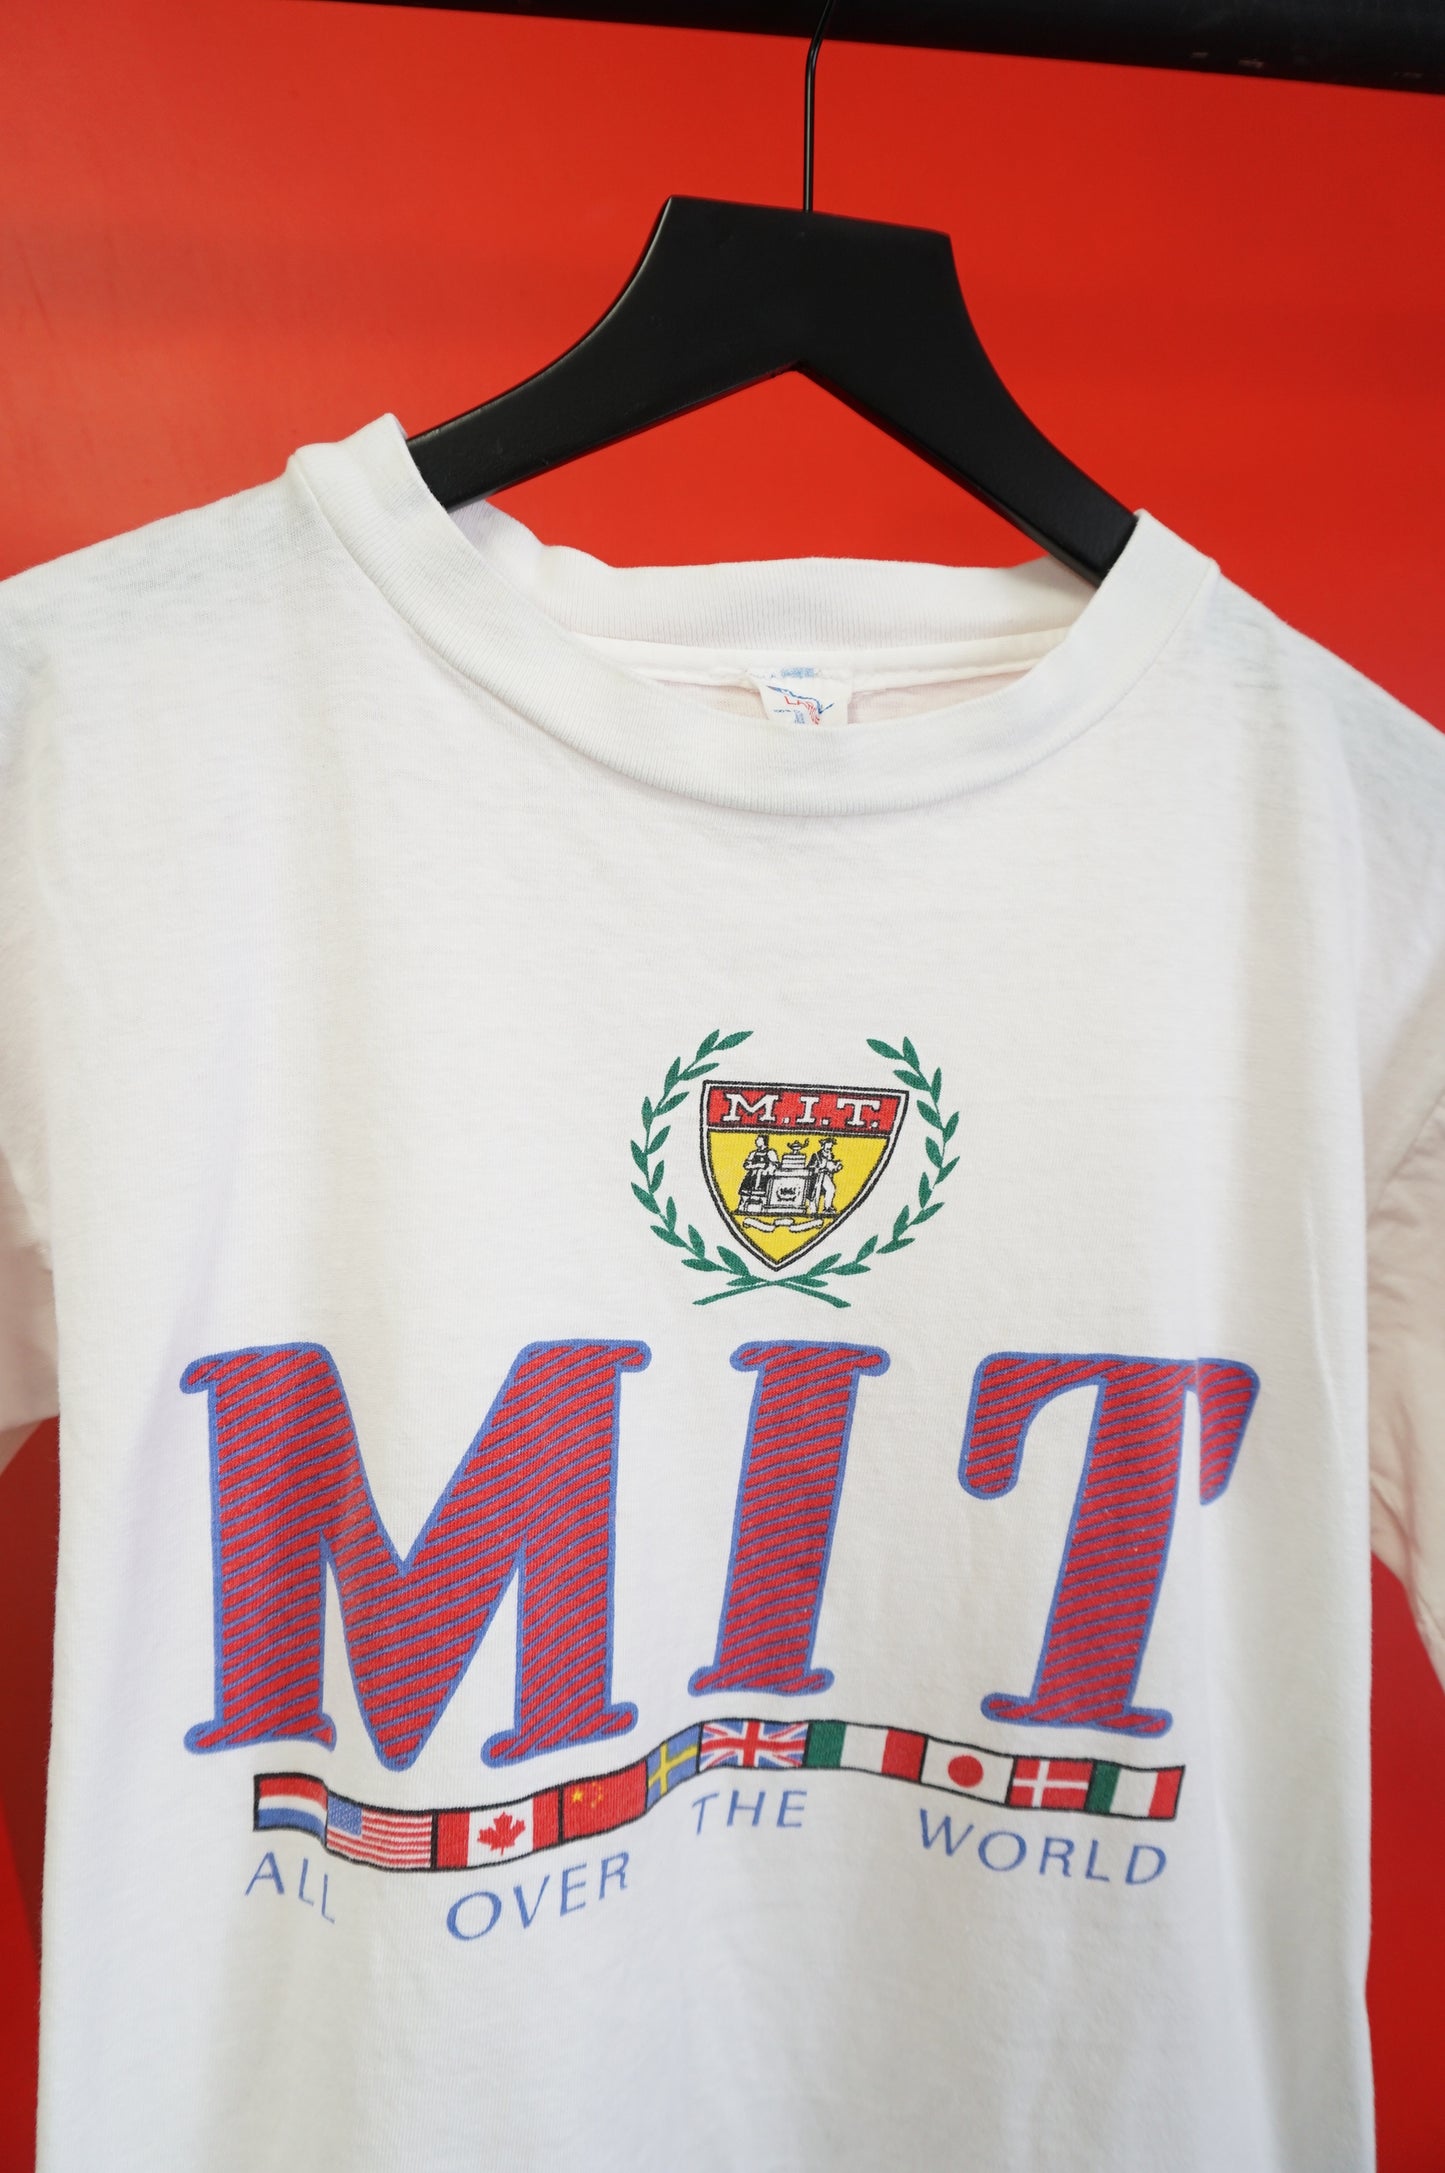 (L) Vtg MIT All Over The World Single Stitch T-Shirt